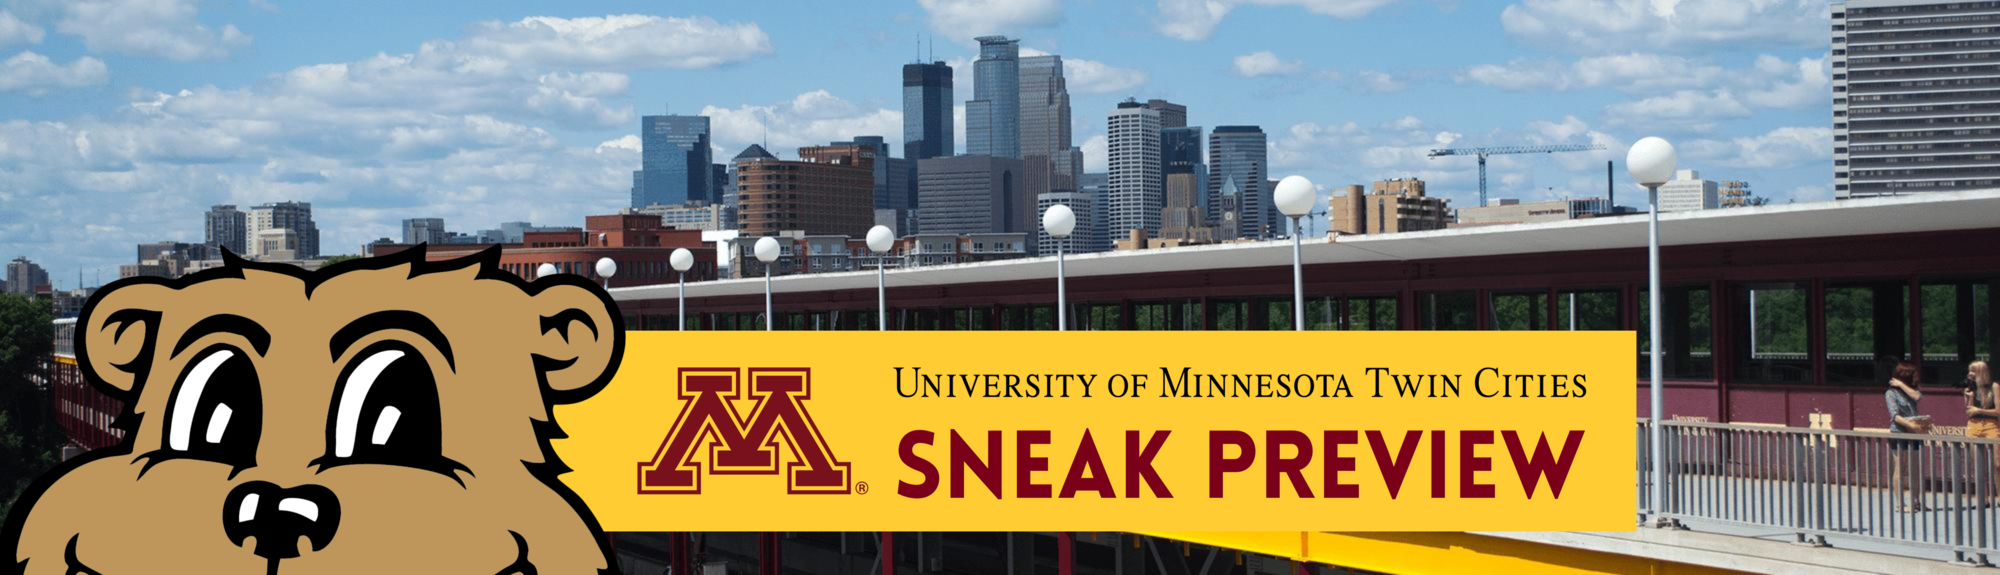 University of Minnesota Twin Cities Sneak Preview